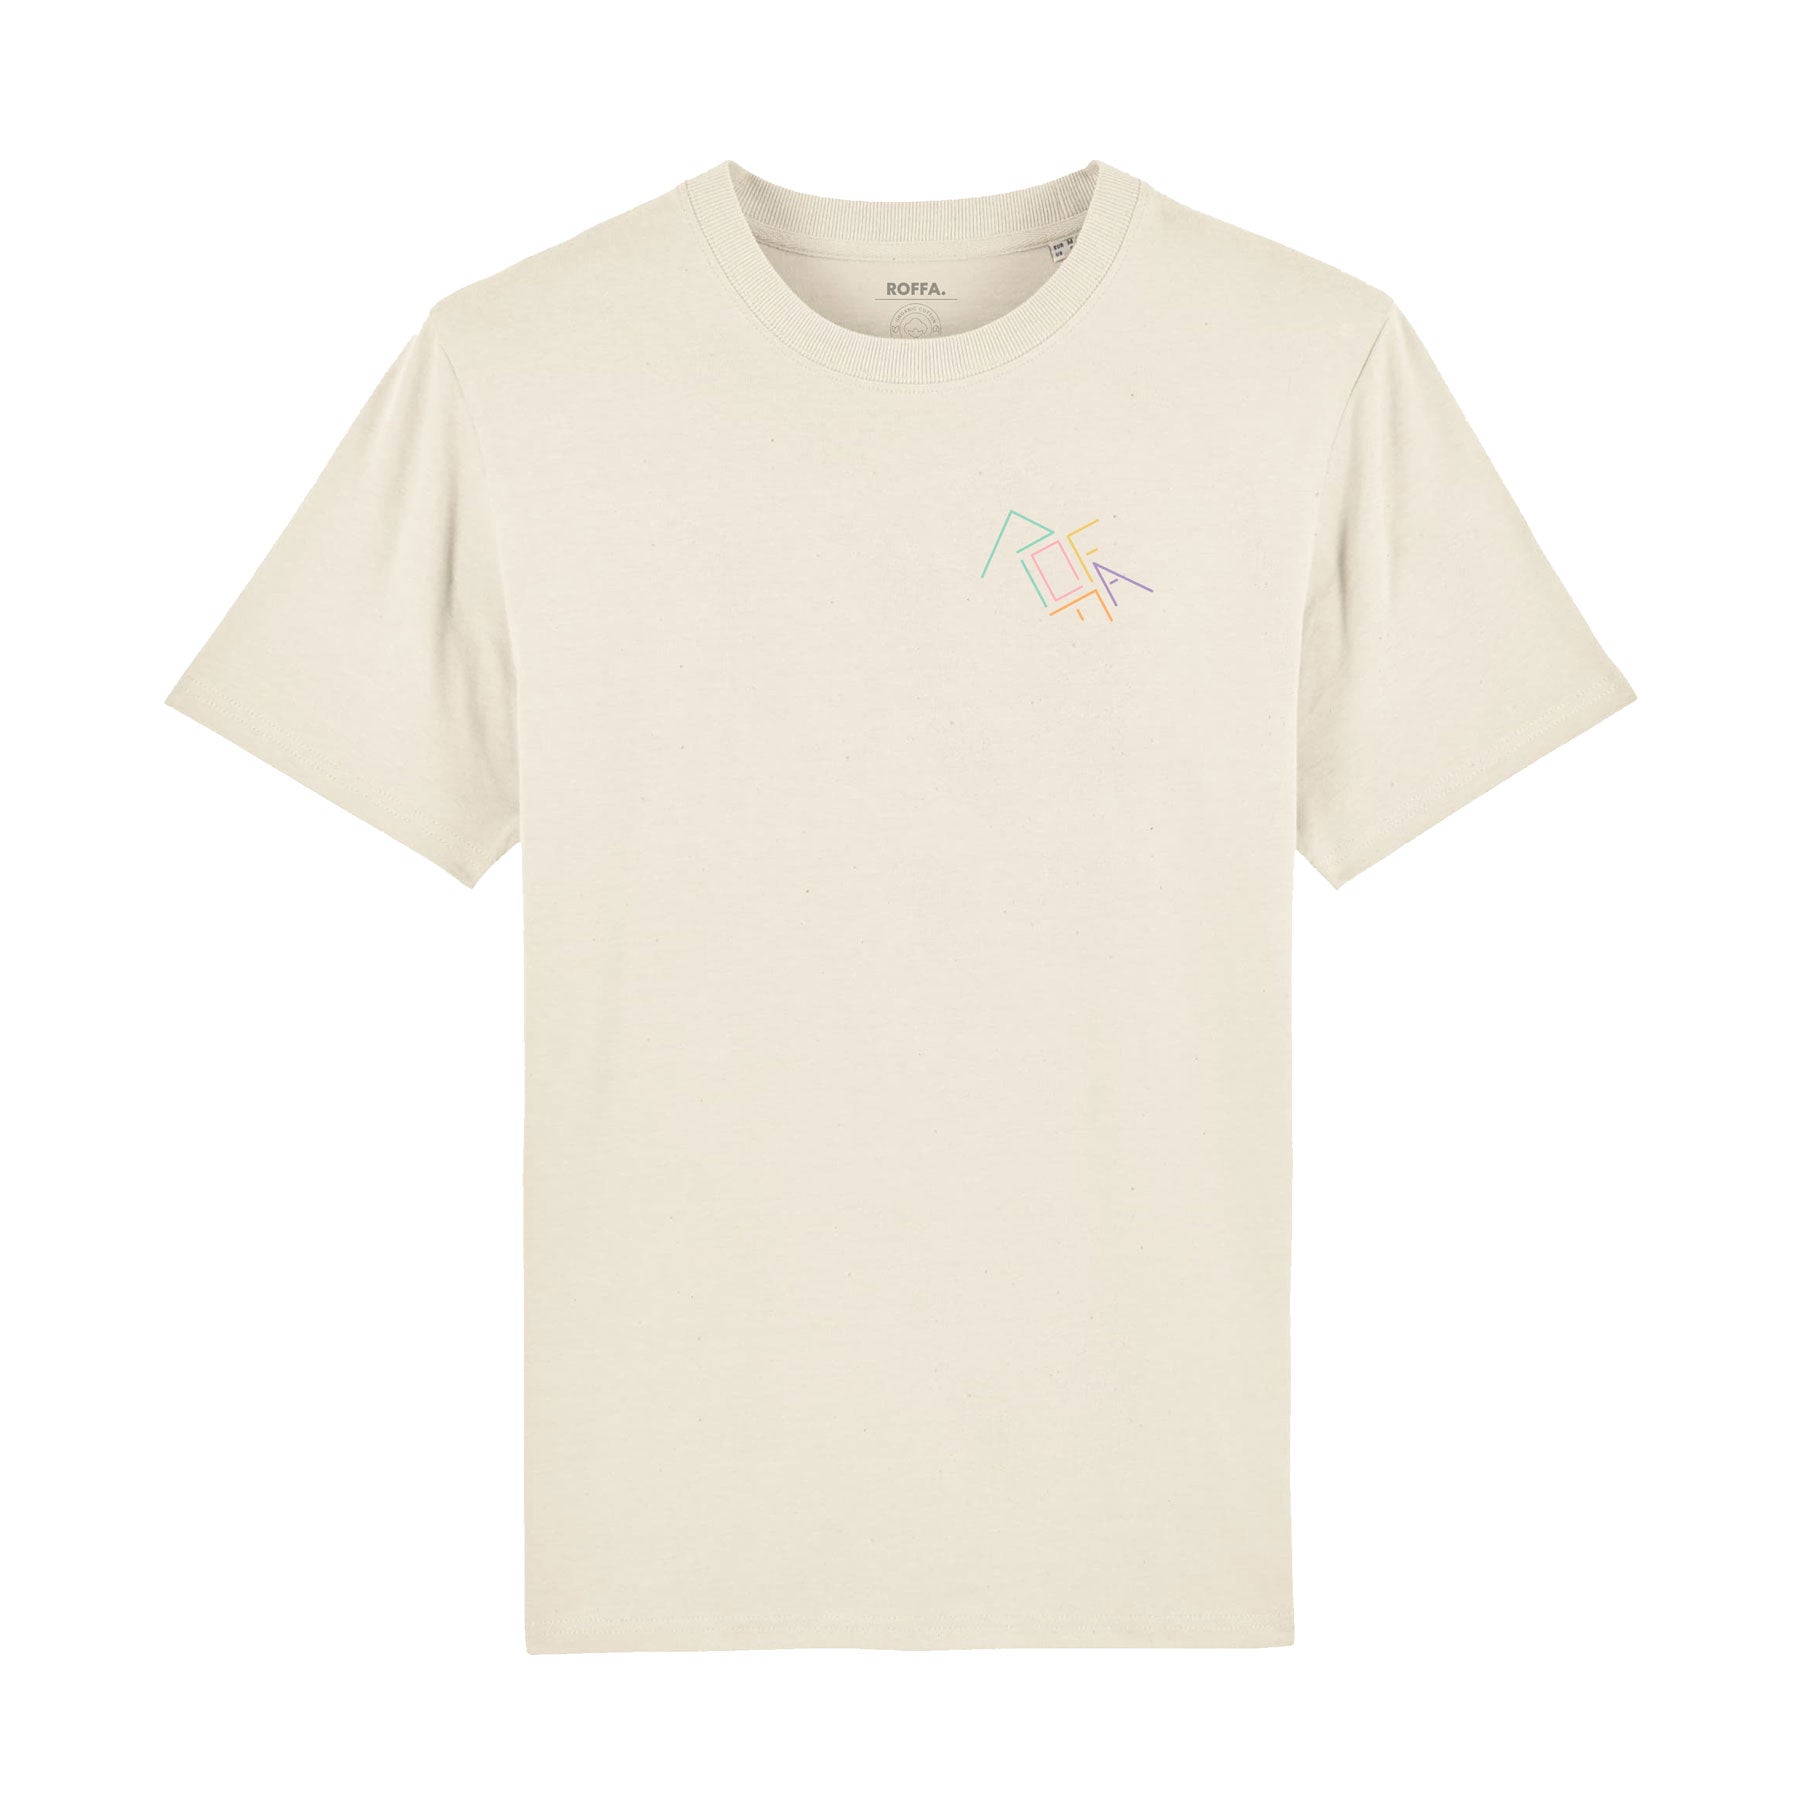 Wit t-shirt met ROFFA. rotterdam in regenboog logo